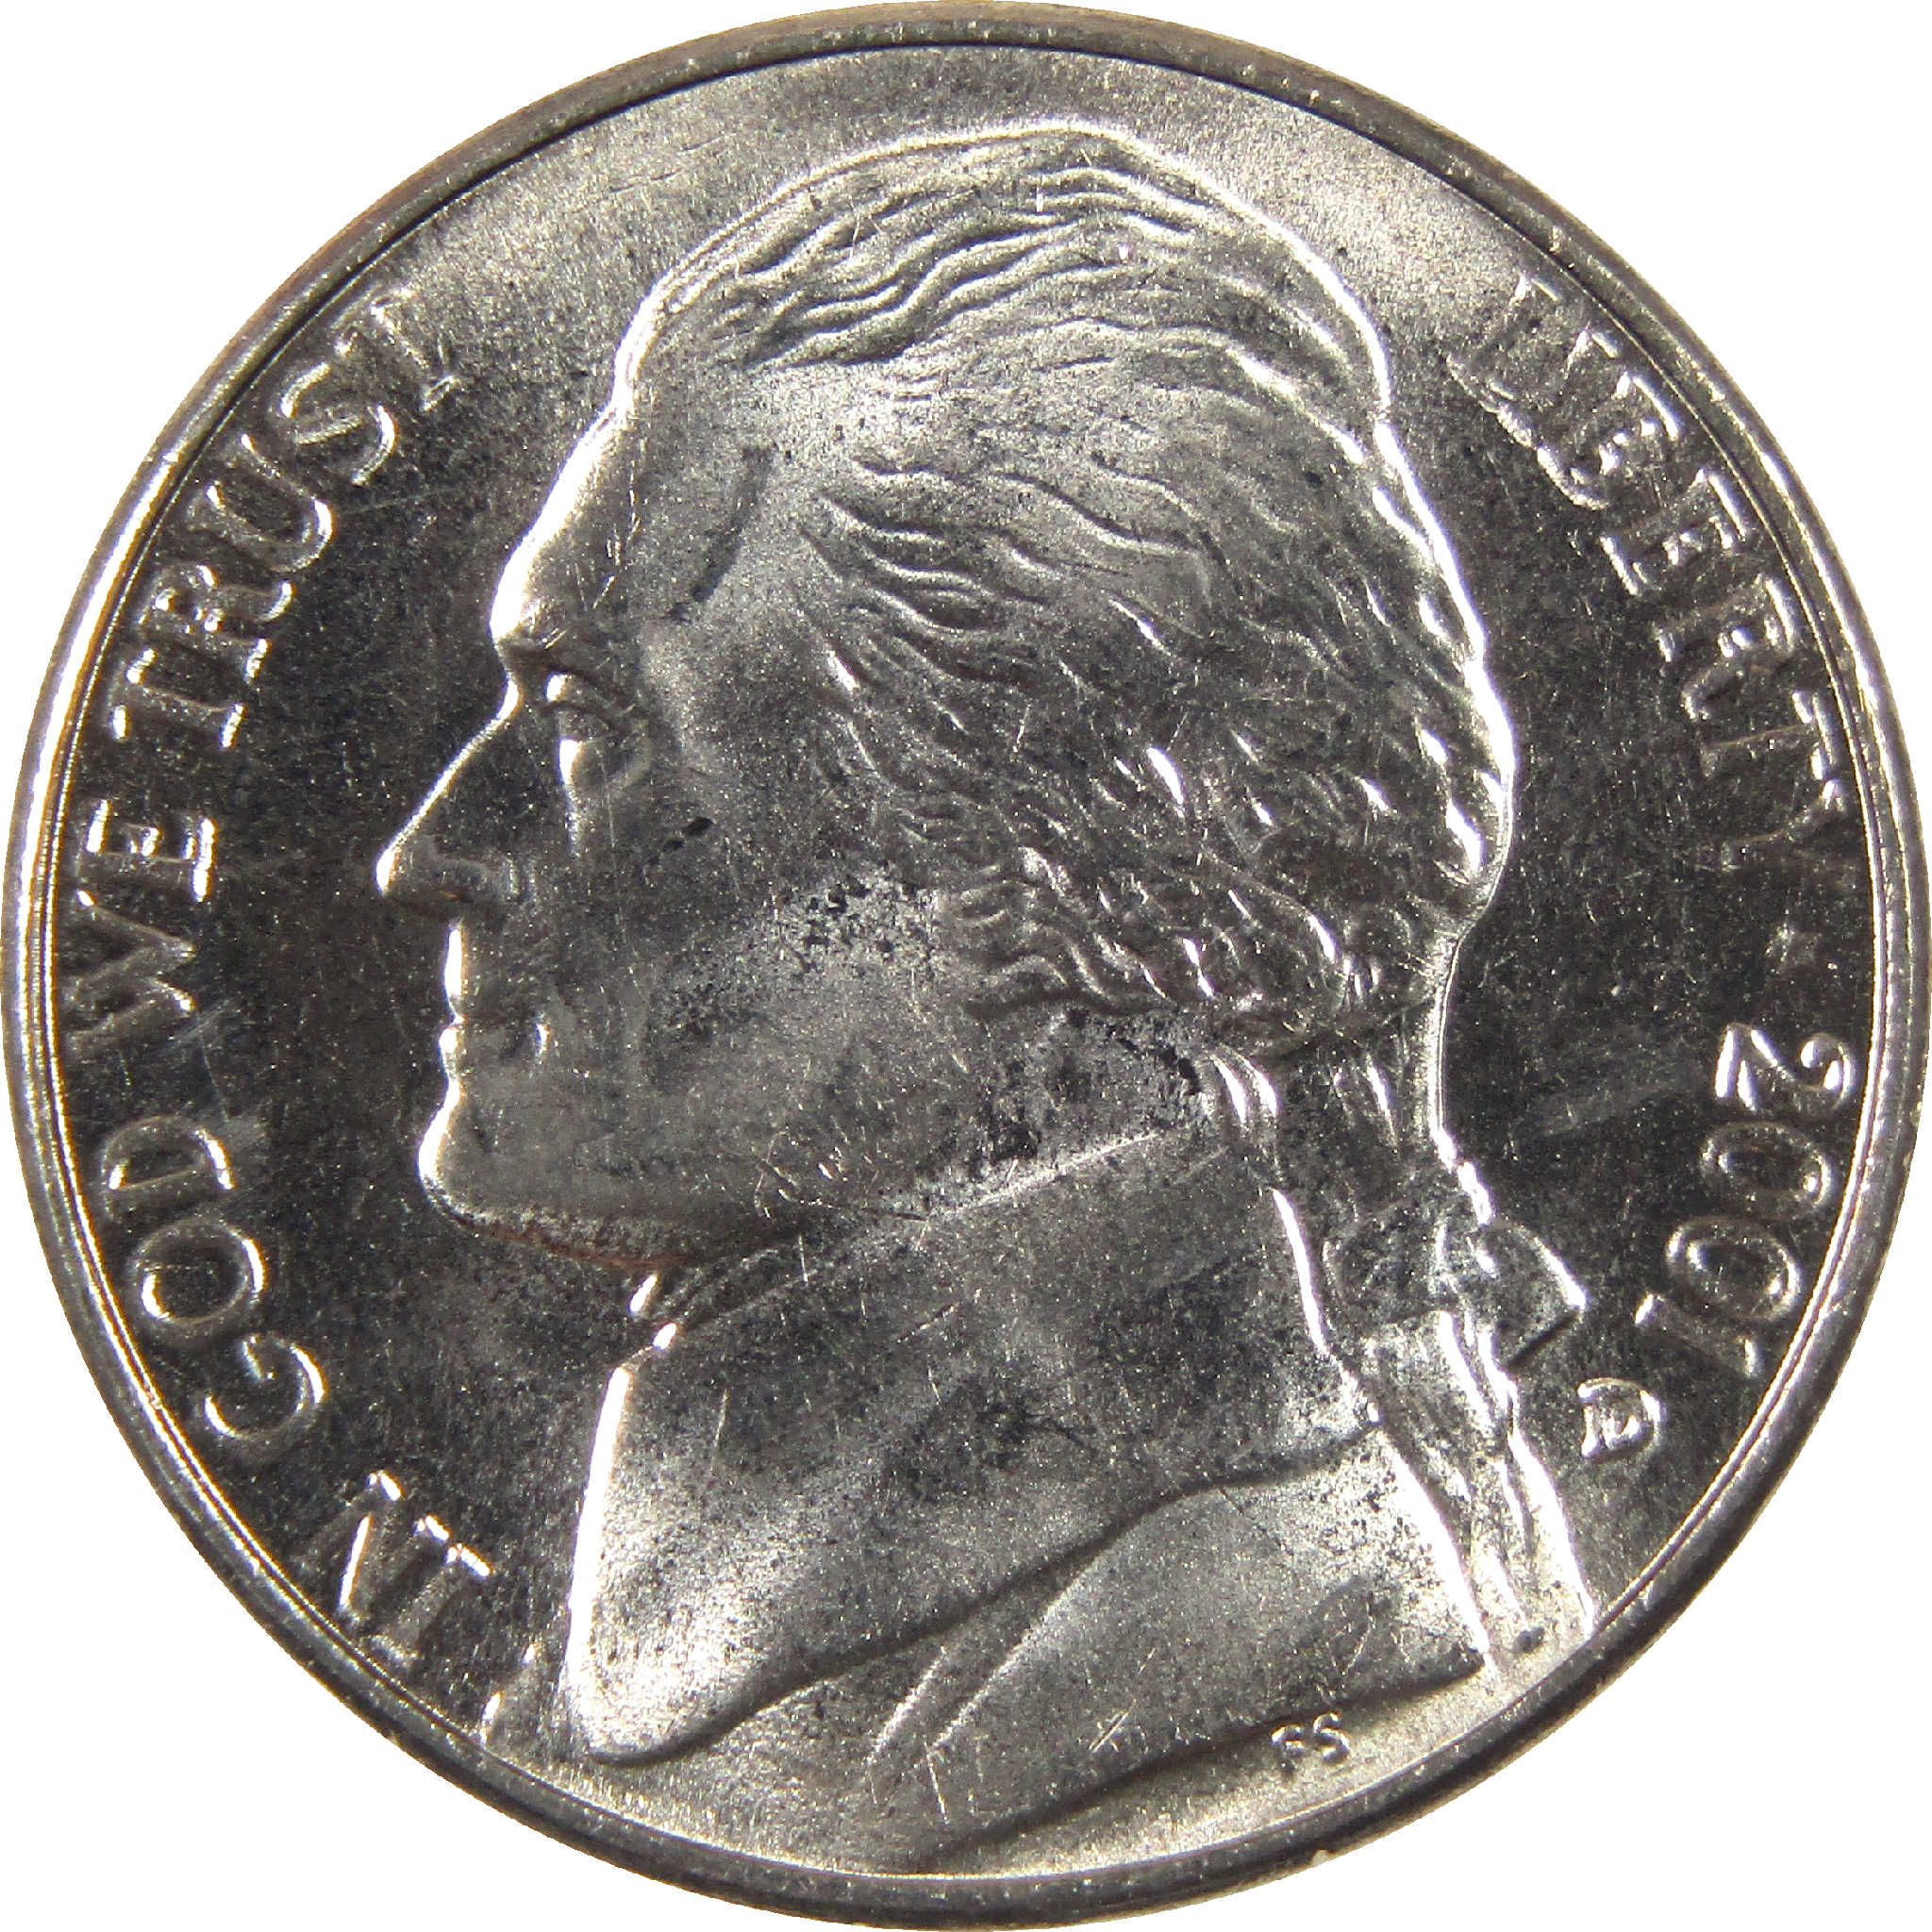 2001 D Jefferson Nickel BU Uncirculated 5c Coin